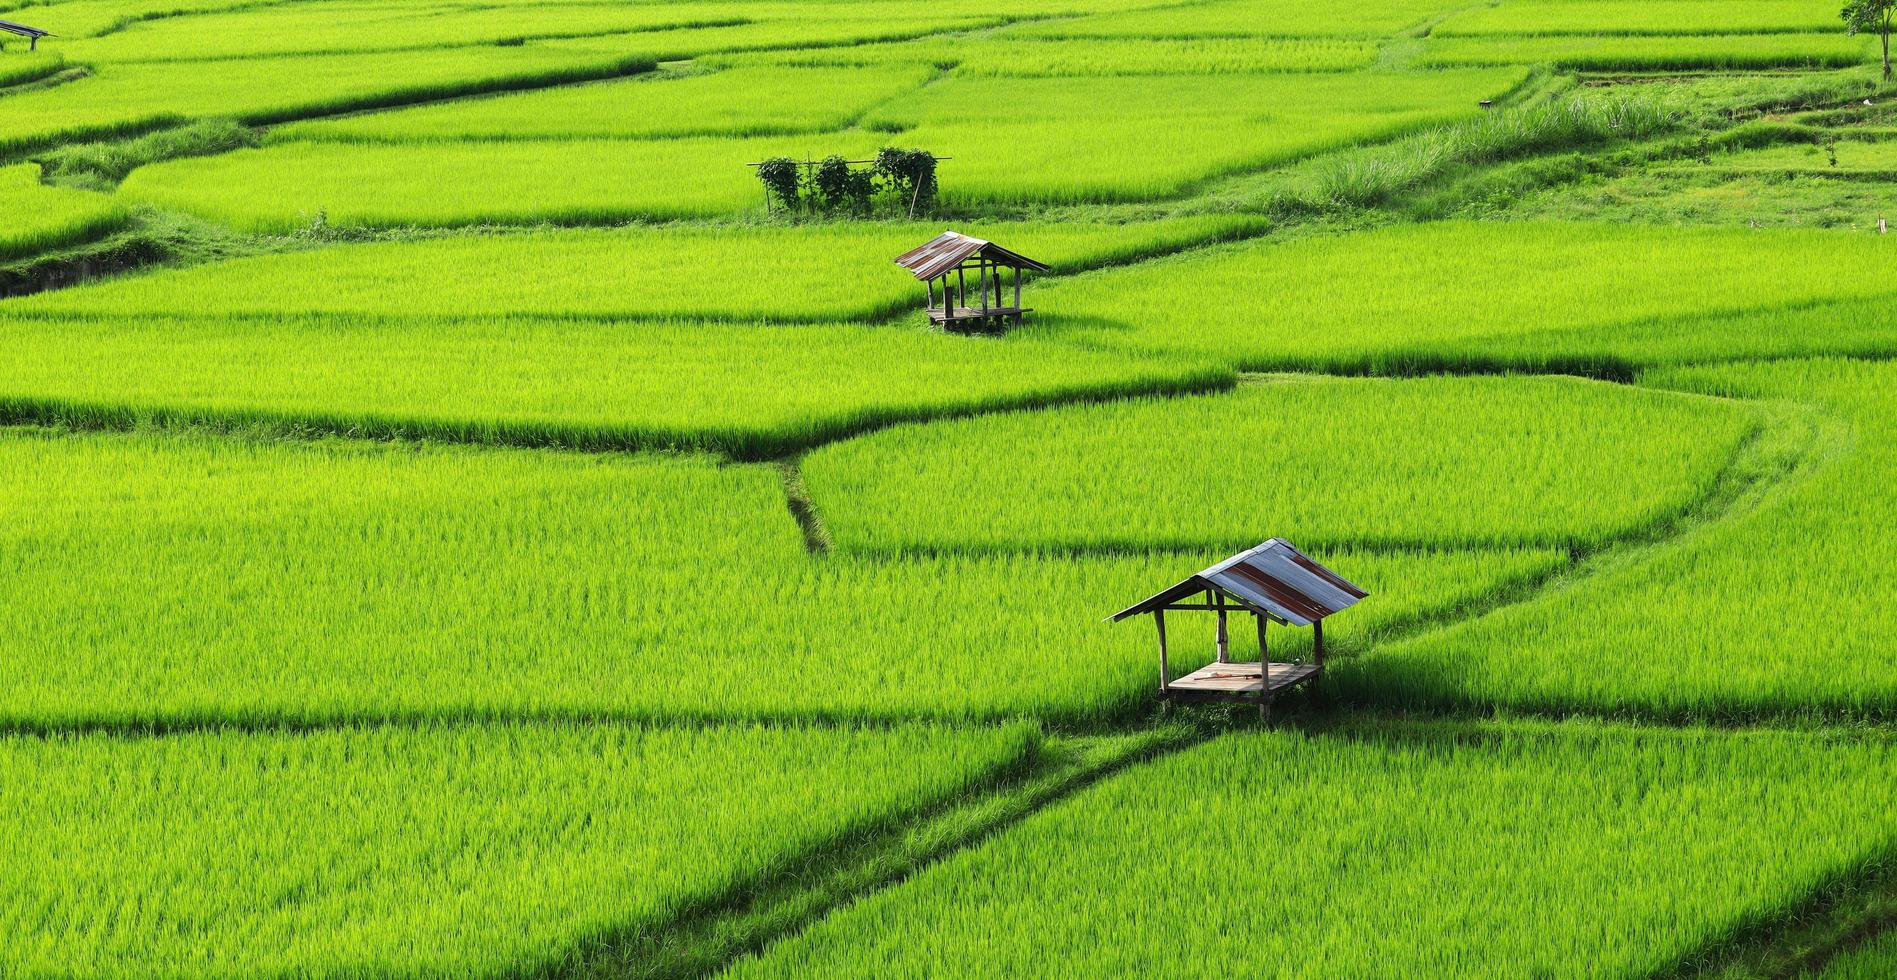 Green rice fields in the rainy season photo